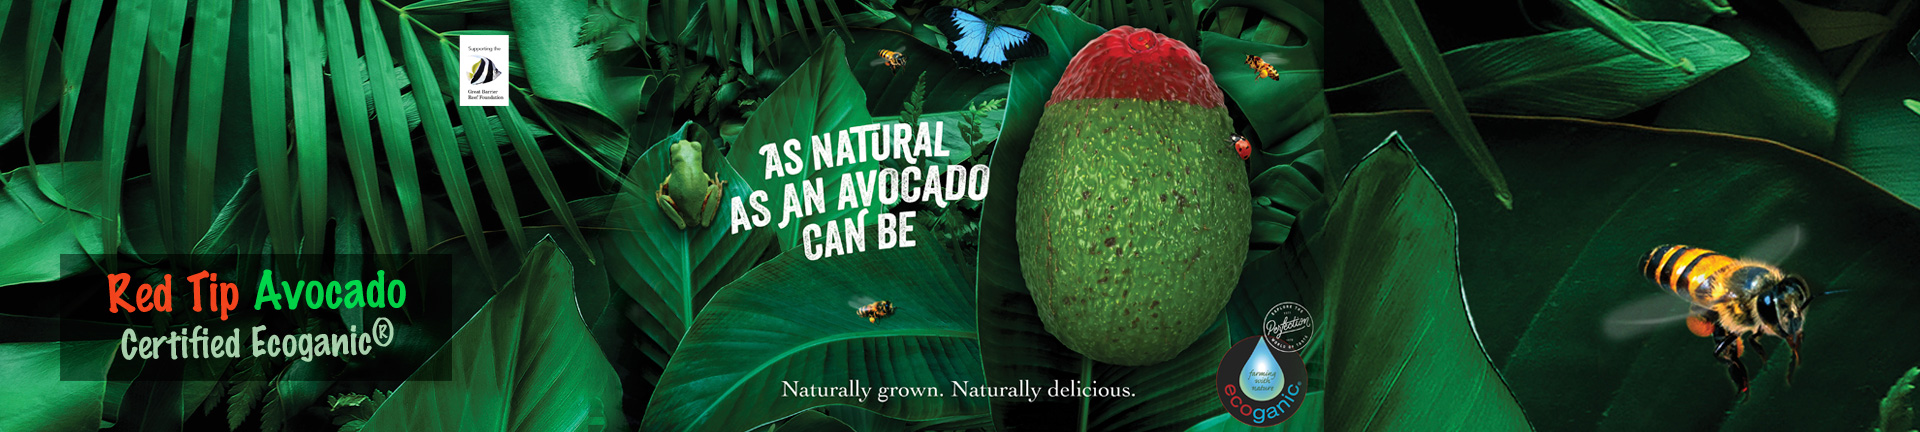 Red Tip Avocado - Certified Ecoganic